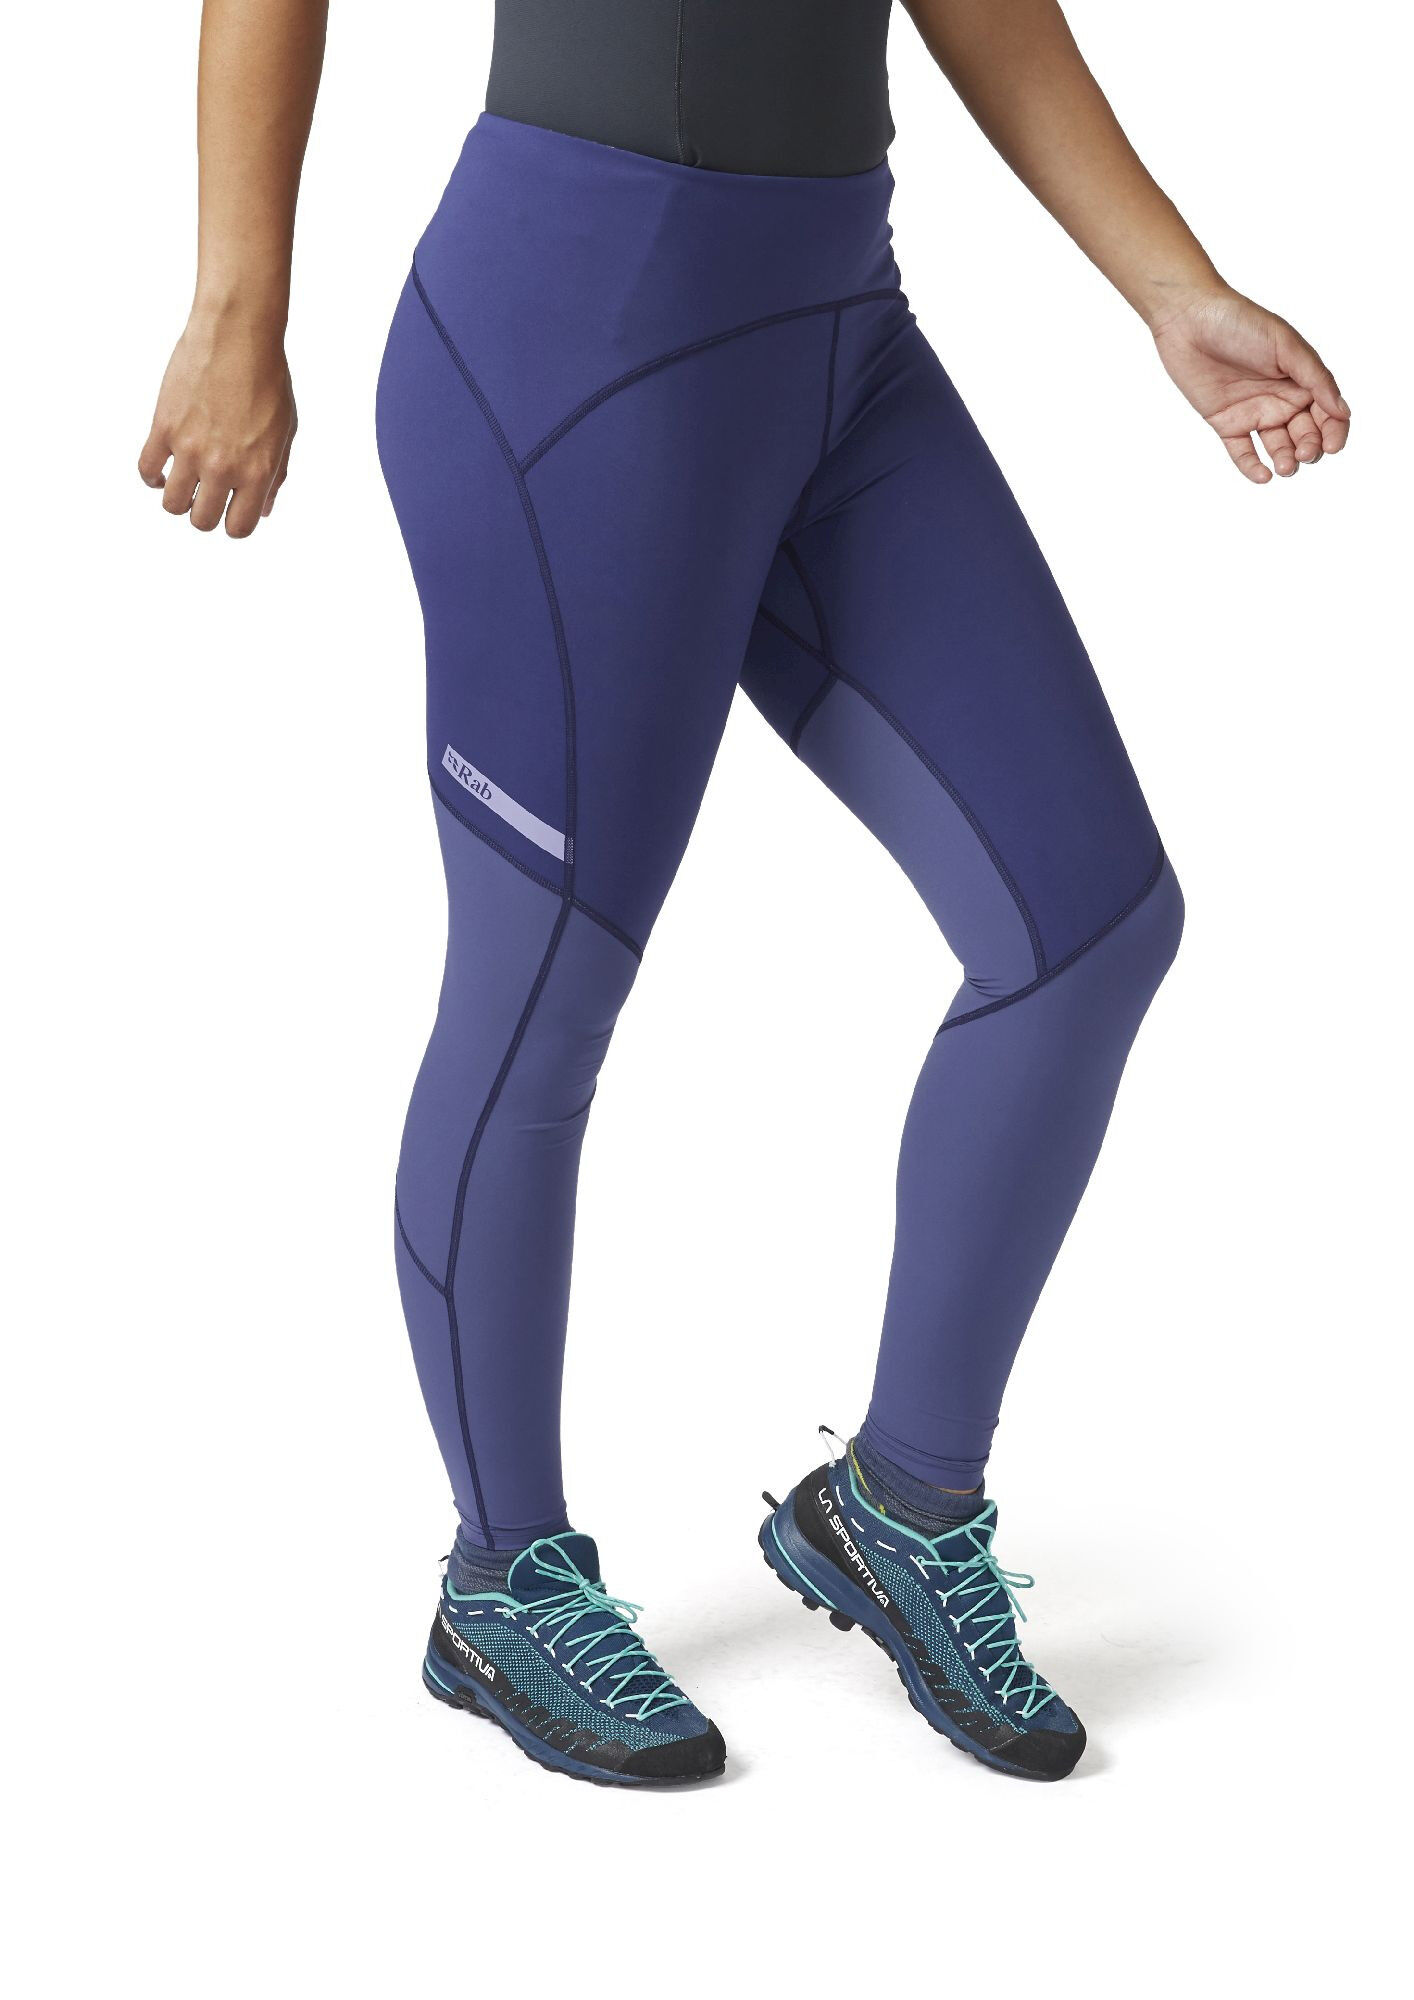 Rab Women's Metron Tights - Running leggings - Women's | Hardloop